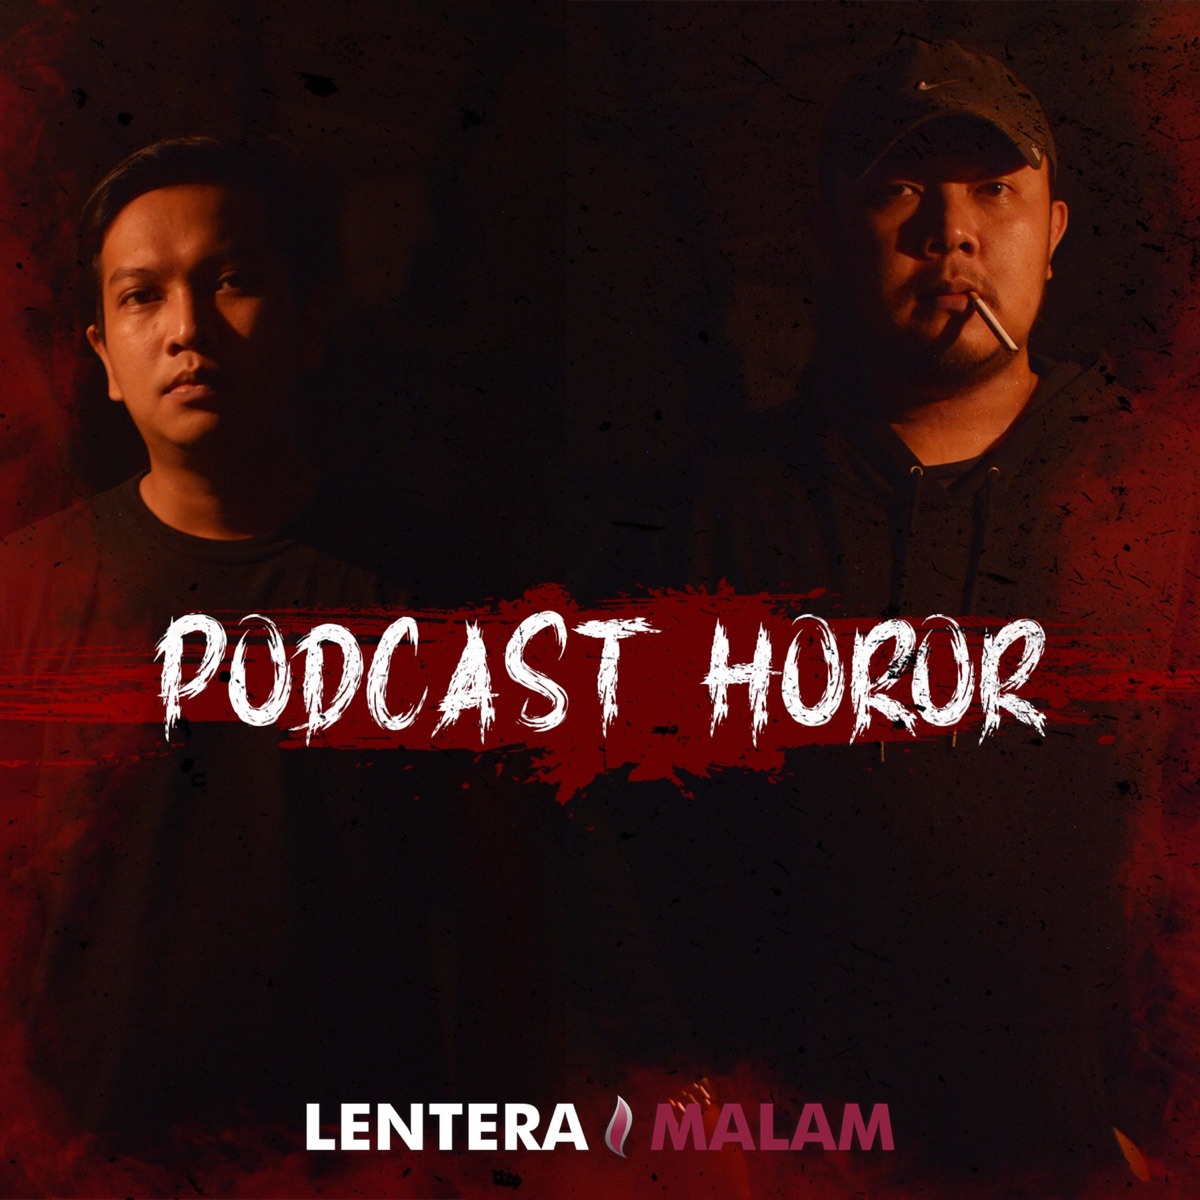 Lentera Malam (Podcast Horor)